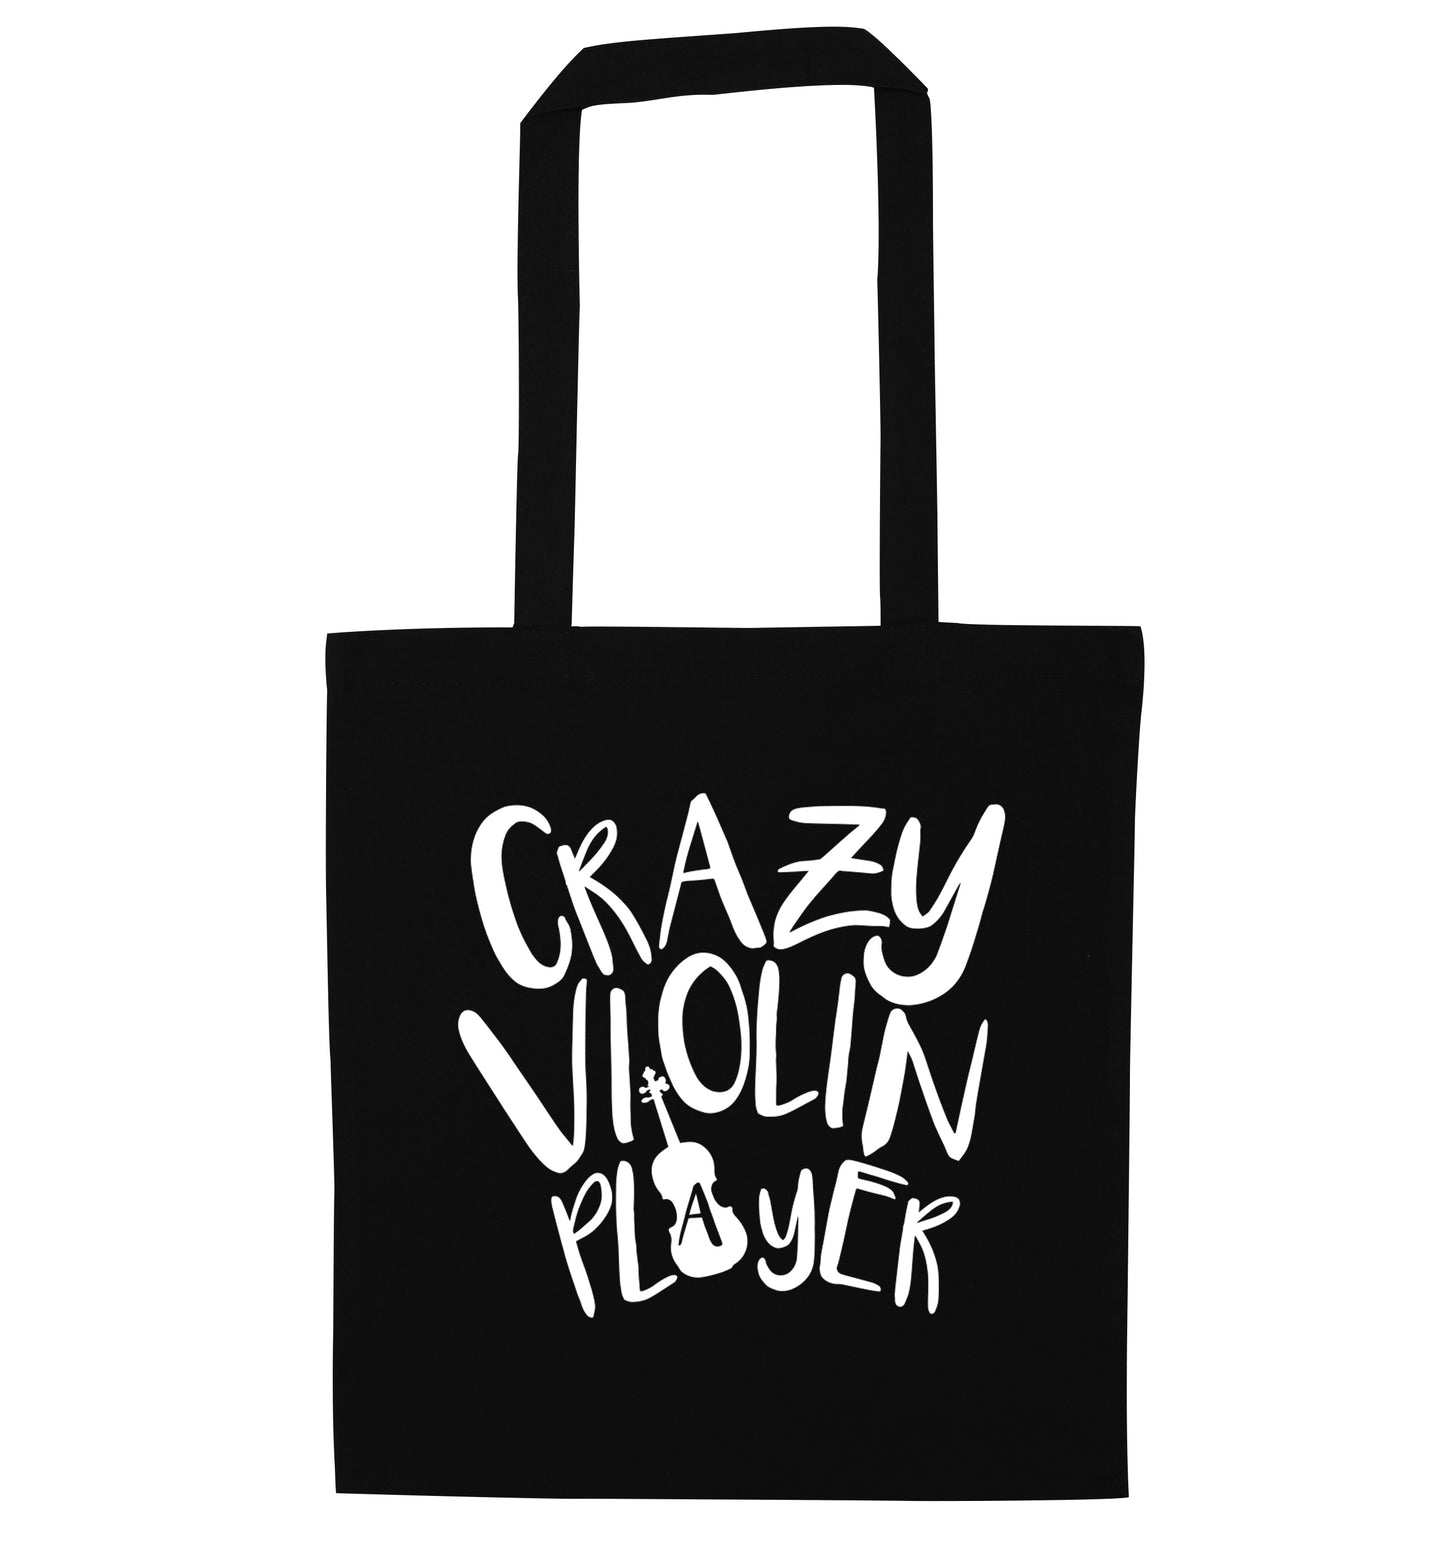 Crazy Violin Player black tote bag